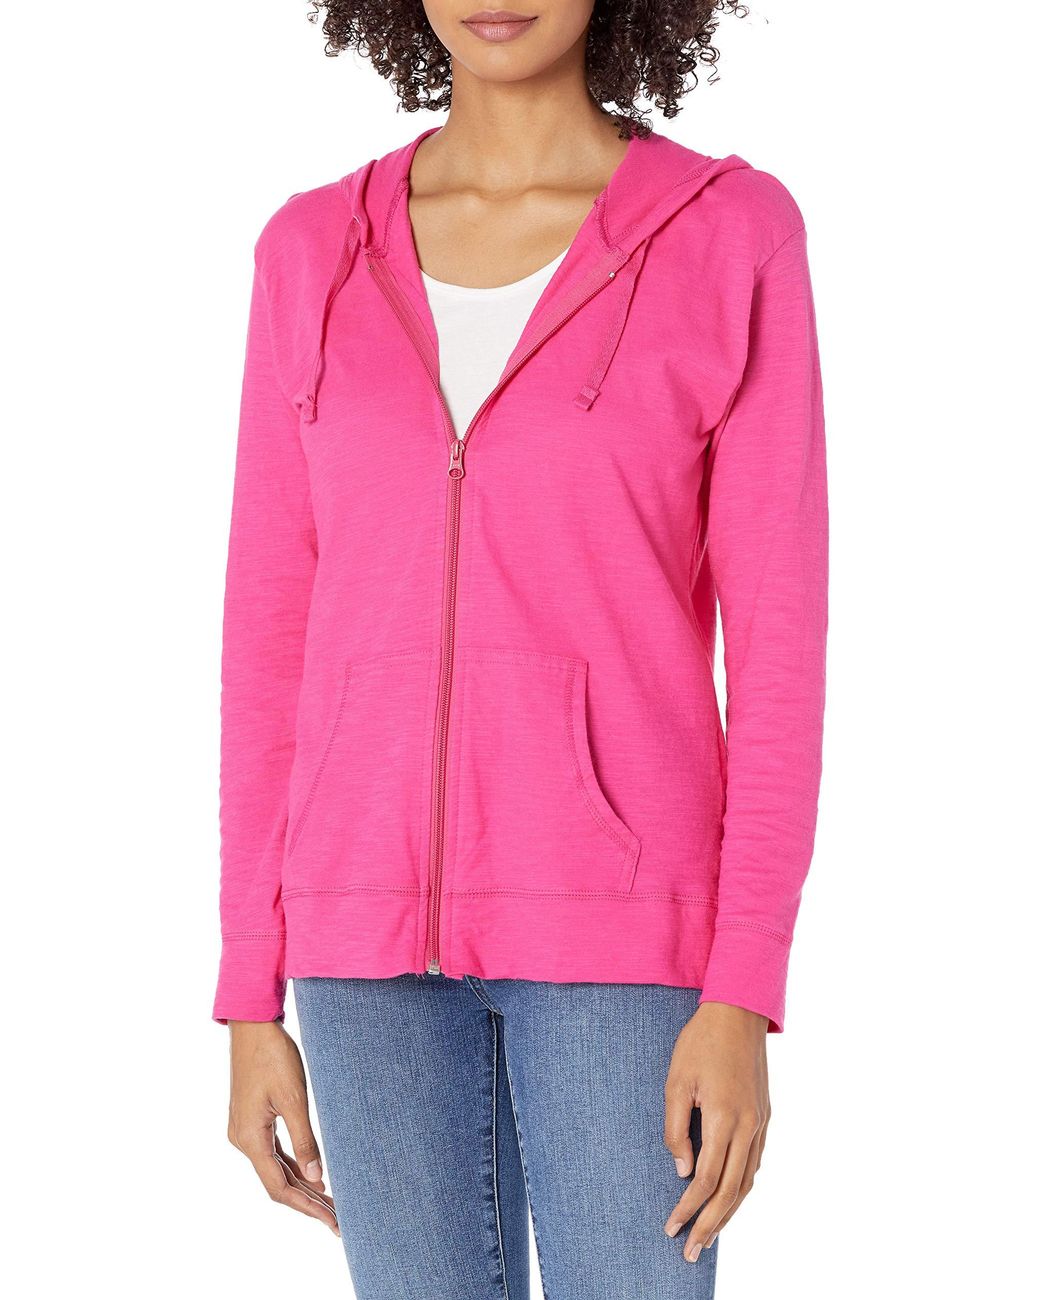 Hanes Jersey Full Zip Hoodie in Pink - Save 21% - Lyst